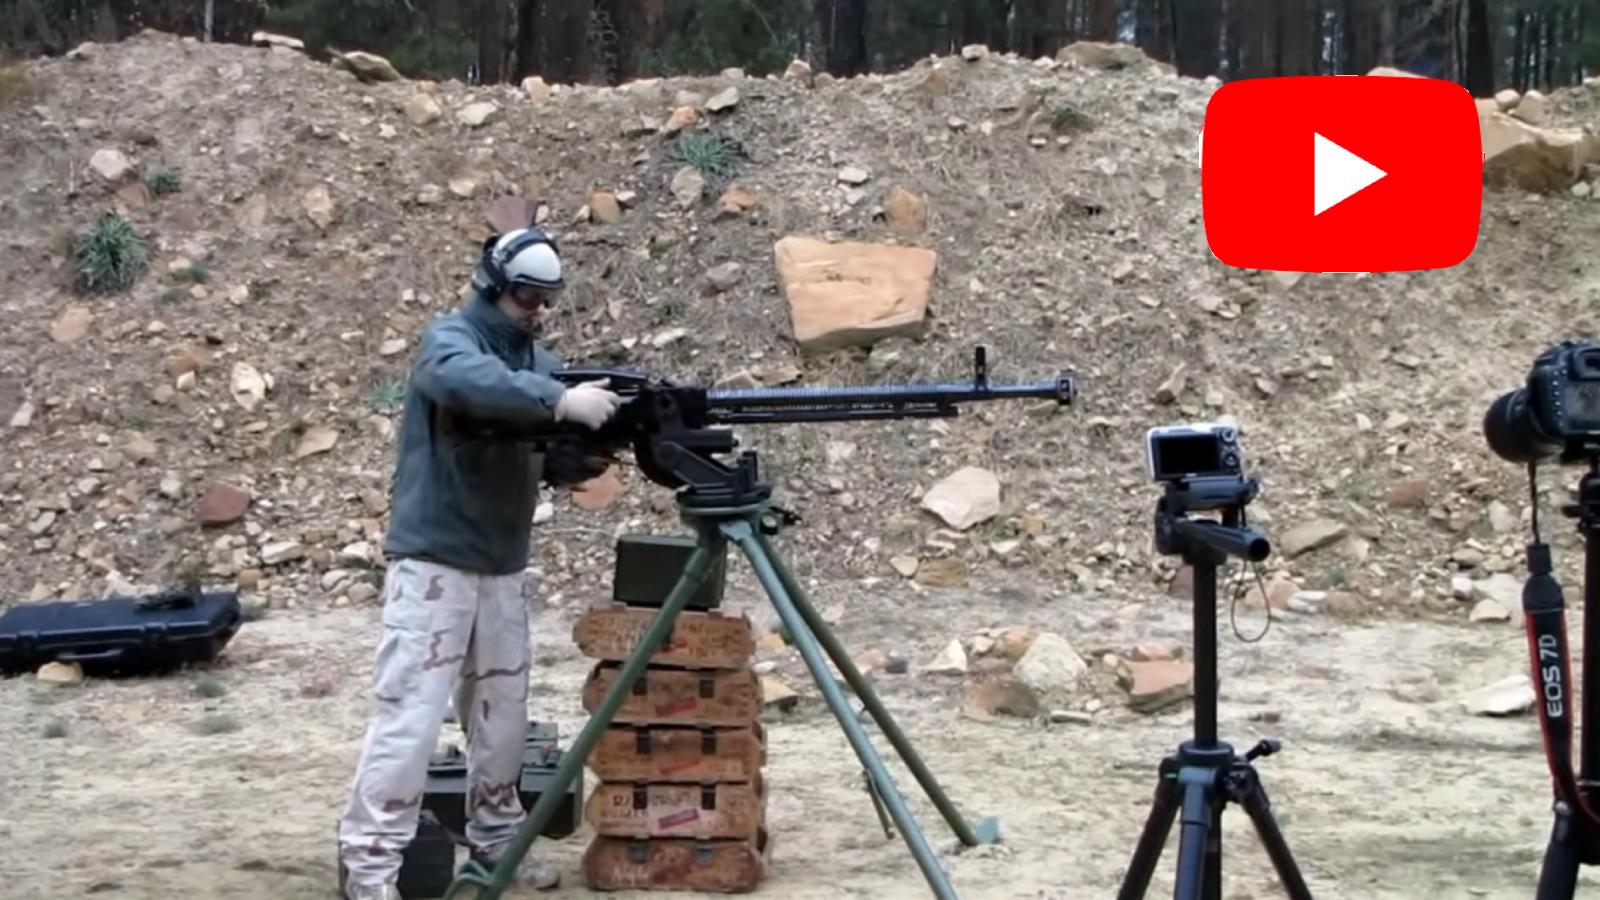 Man firing gun with YouTube logo top right corner.